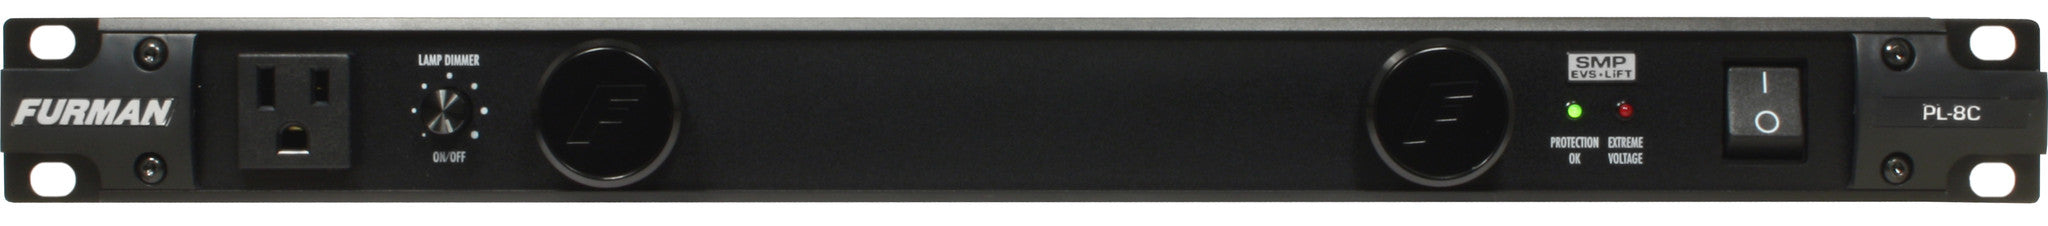 Accessories - Furman - Furman Sound PL-8C - Professional Audio Design, Inc